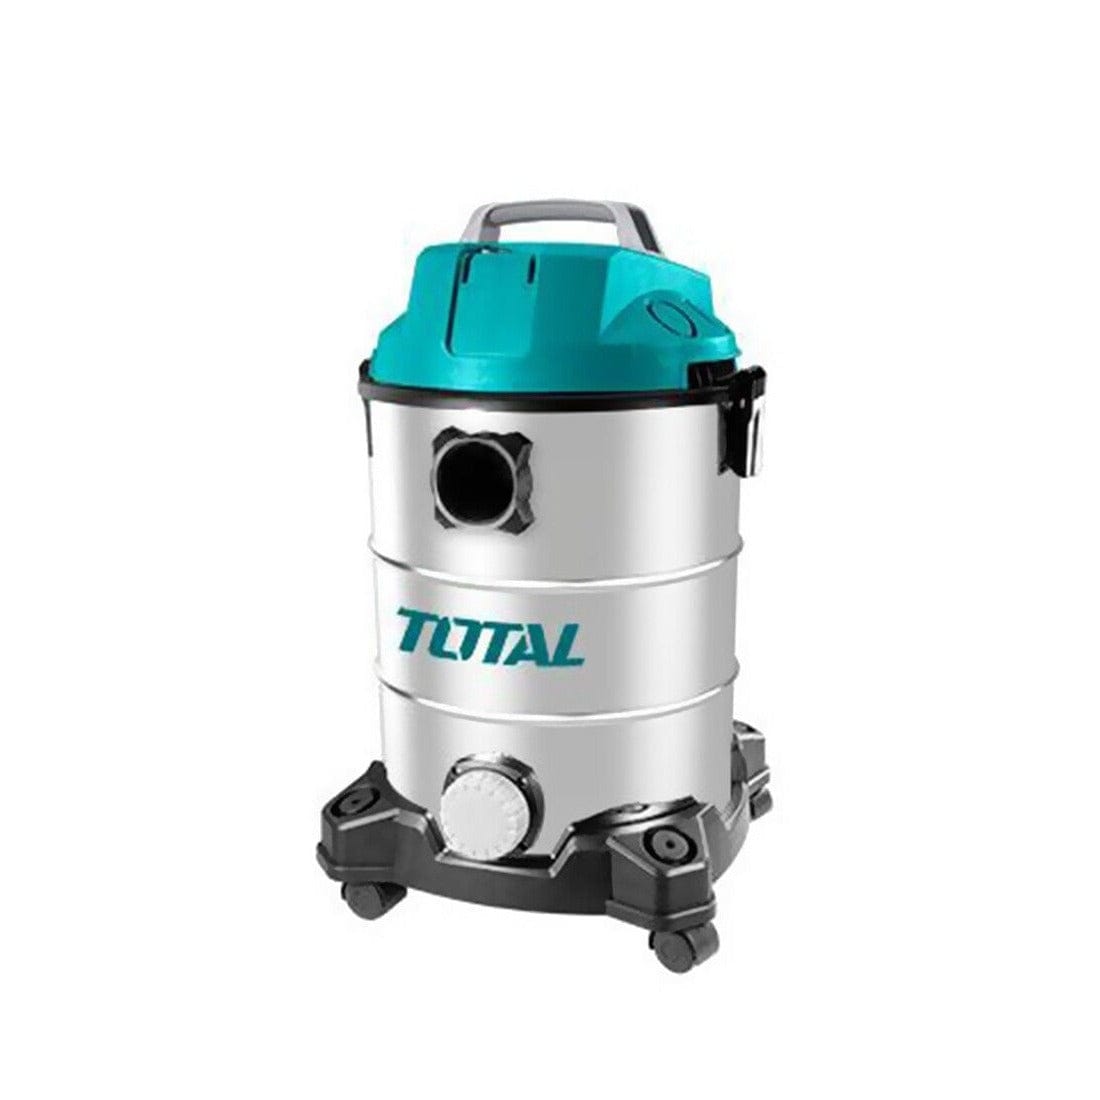 Total Wet & Dry Vacuum Cleaner 30 Liters 1300W - TVC13301 | Supply Master Ghana Steam & Vacuum Cleaner Buy Tools hardware Building materials